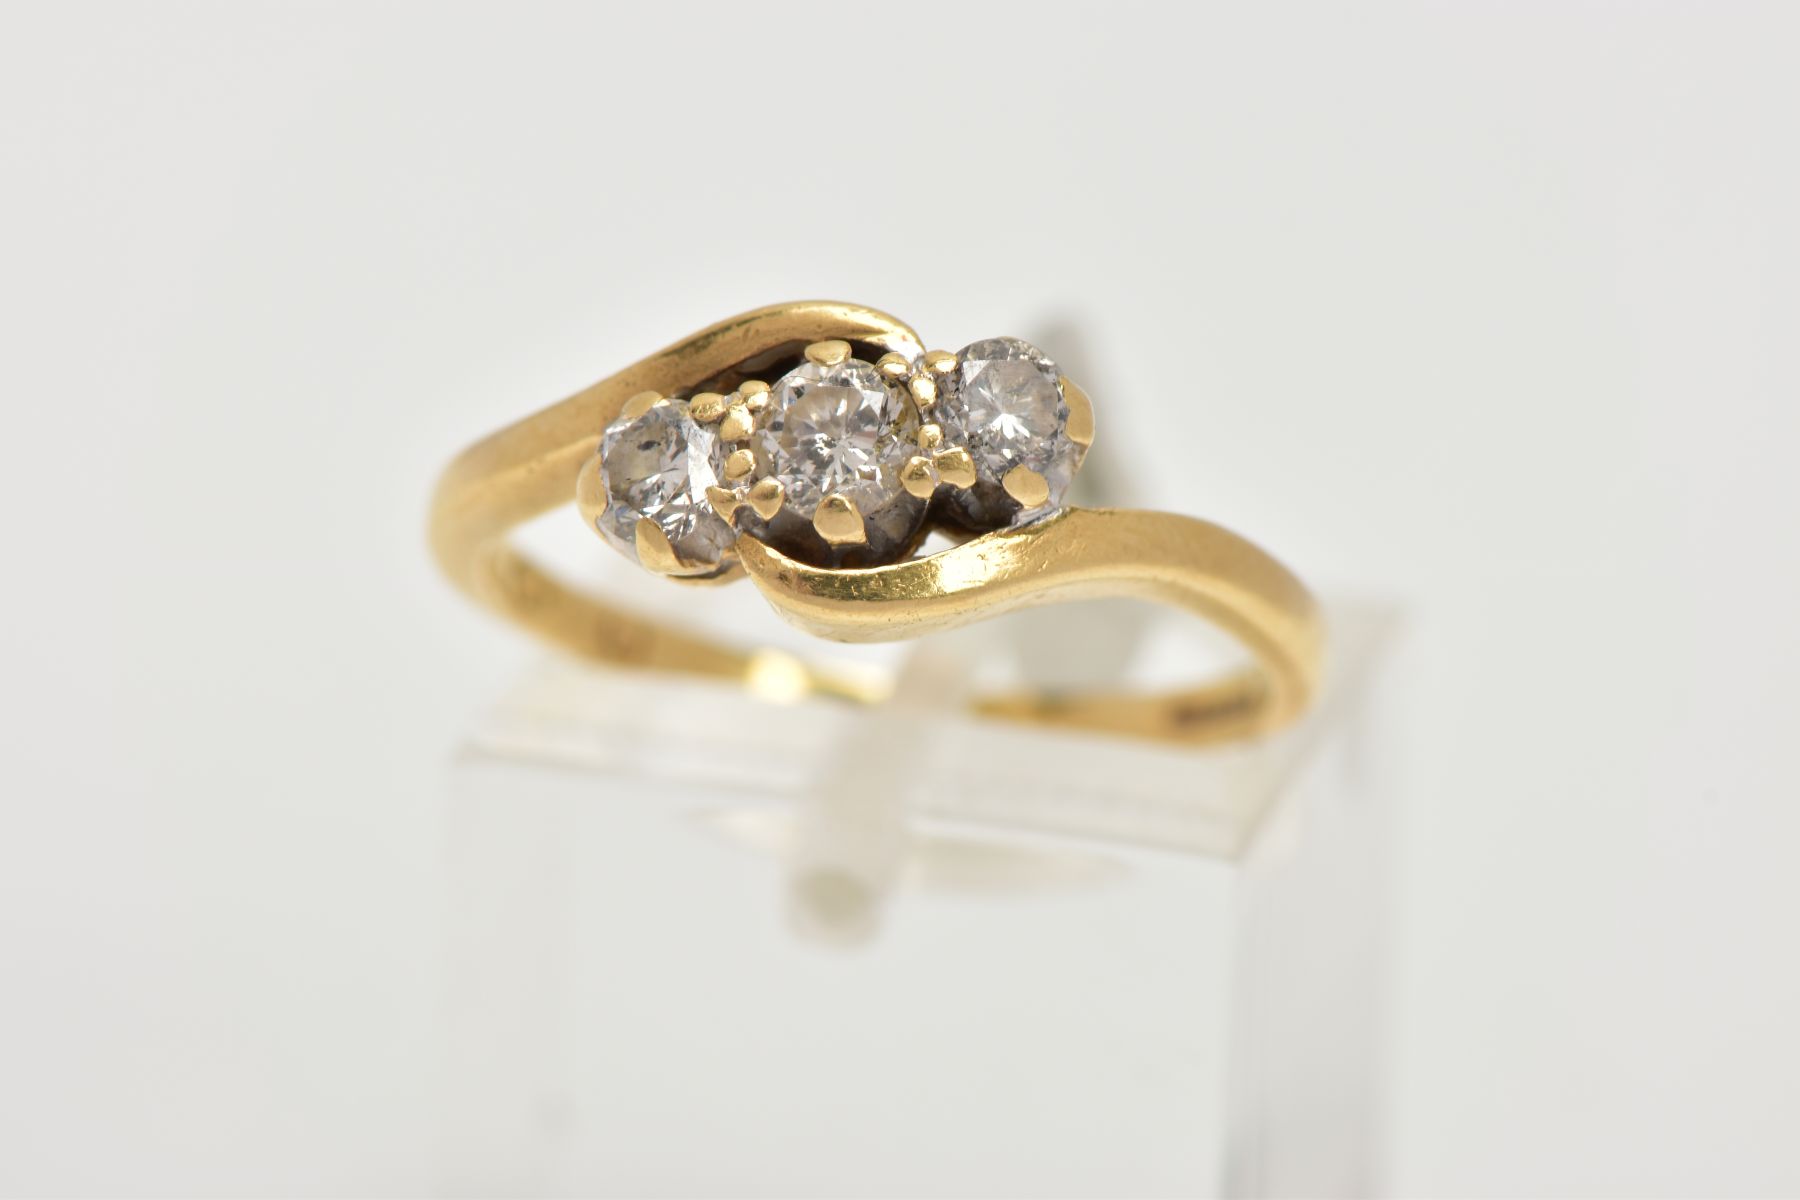 AN 18CT GOLD THREE STONE DIAMOND RING, cross over design set with three round brilliant cut